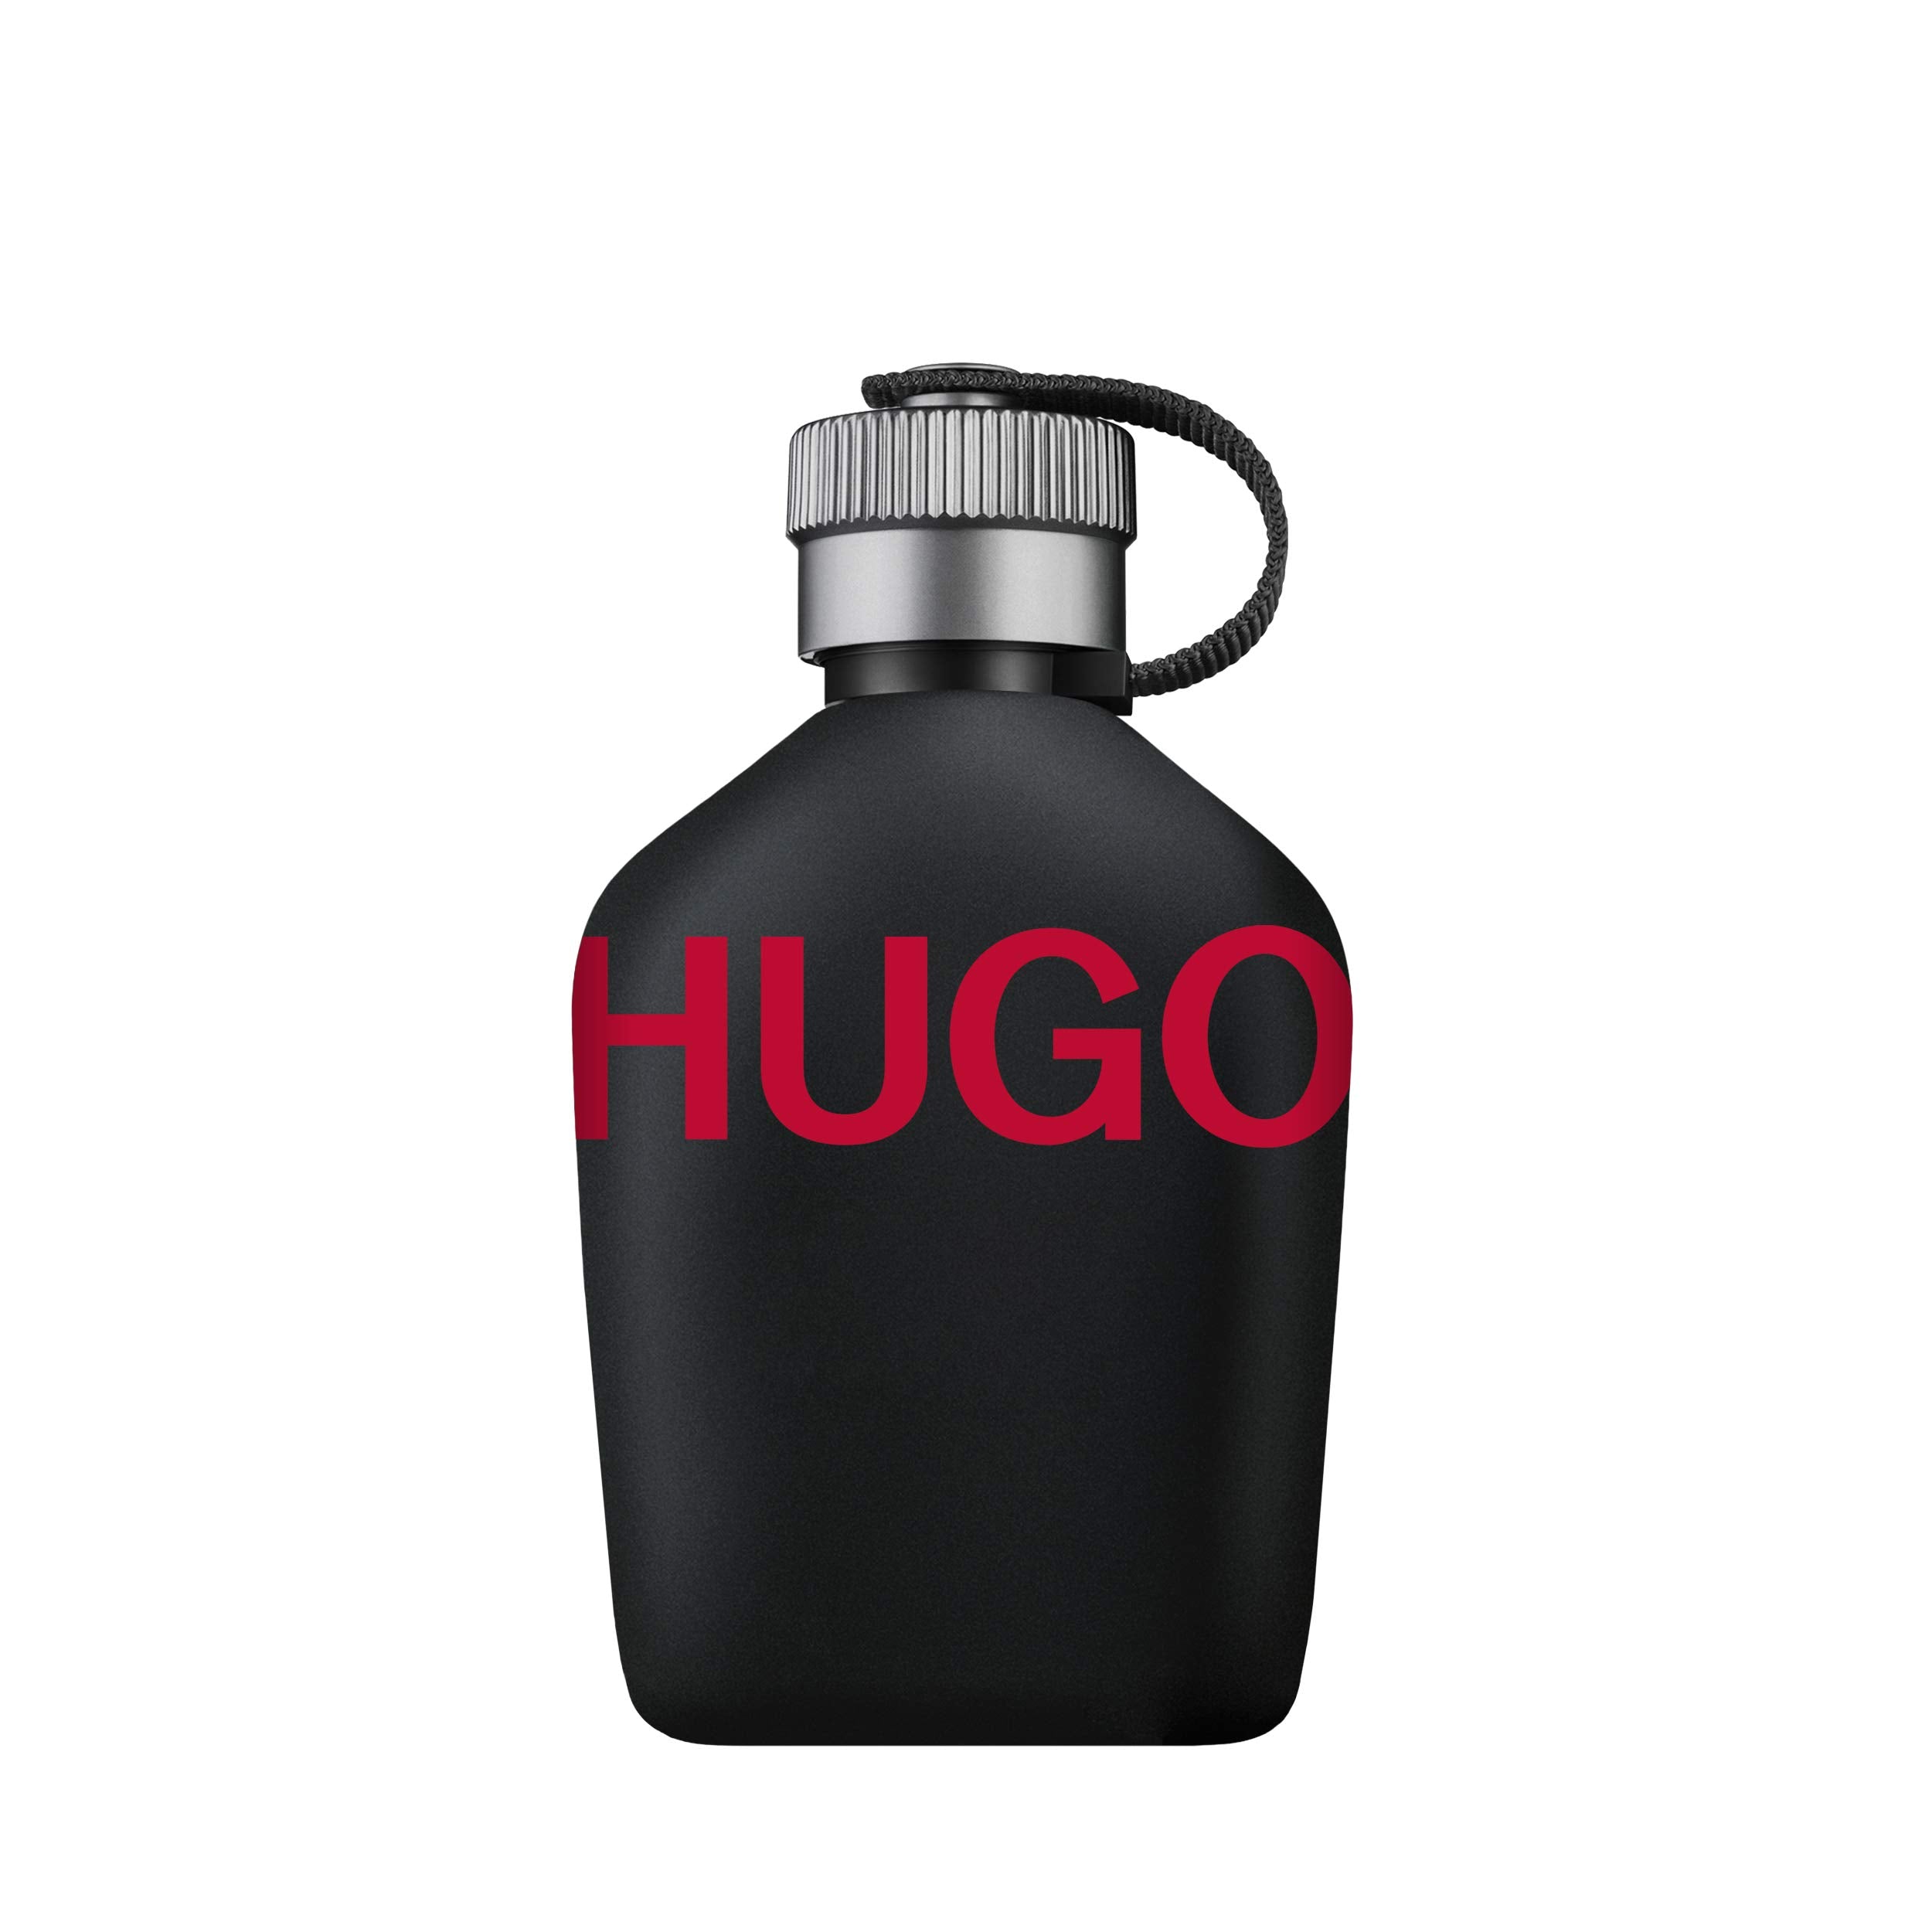 Hugo Boss Just Different Perfume for Men Eau De Toilette 125ML